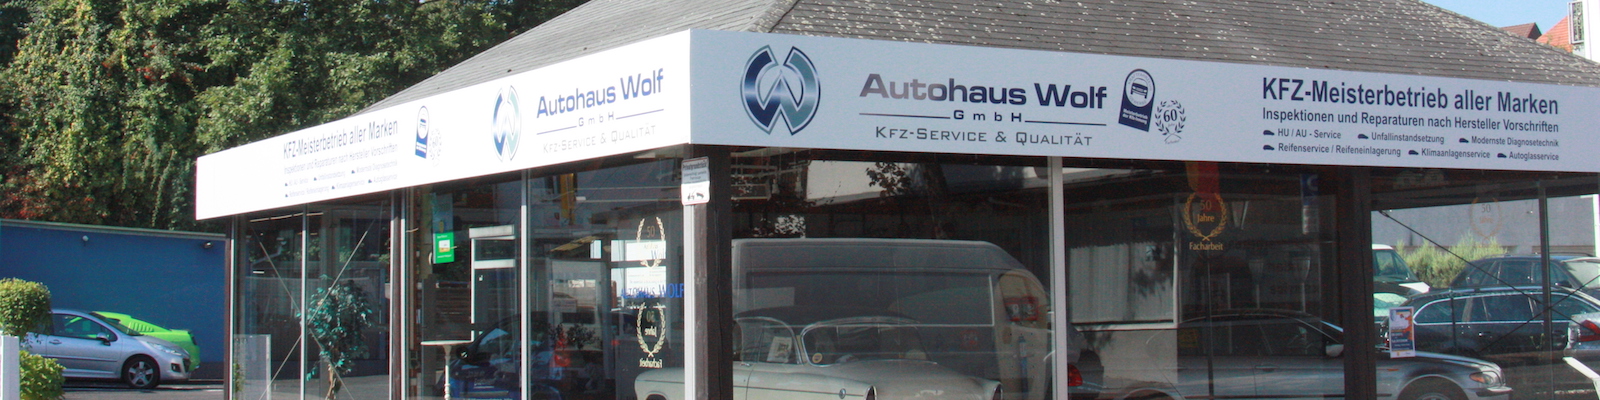 (c) Autohaus-wolf-kelkheim.de